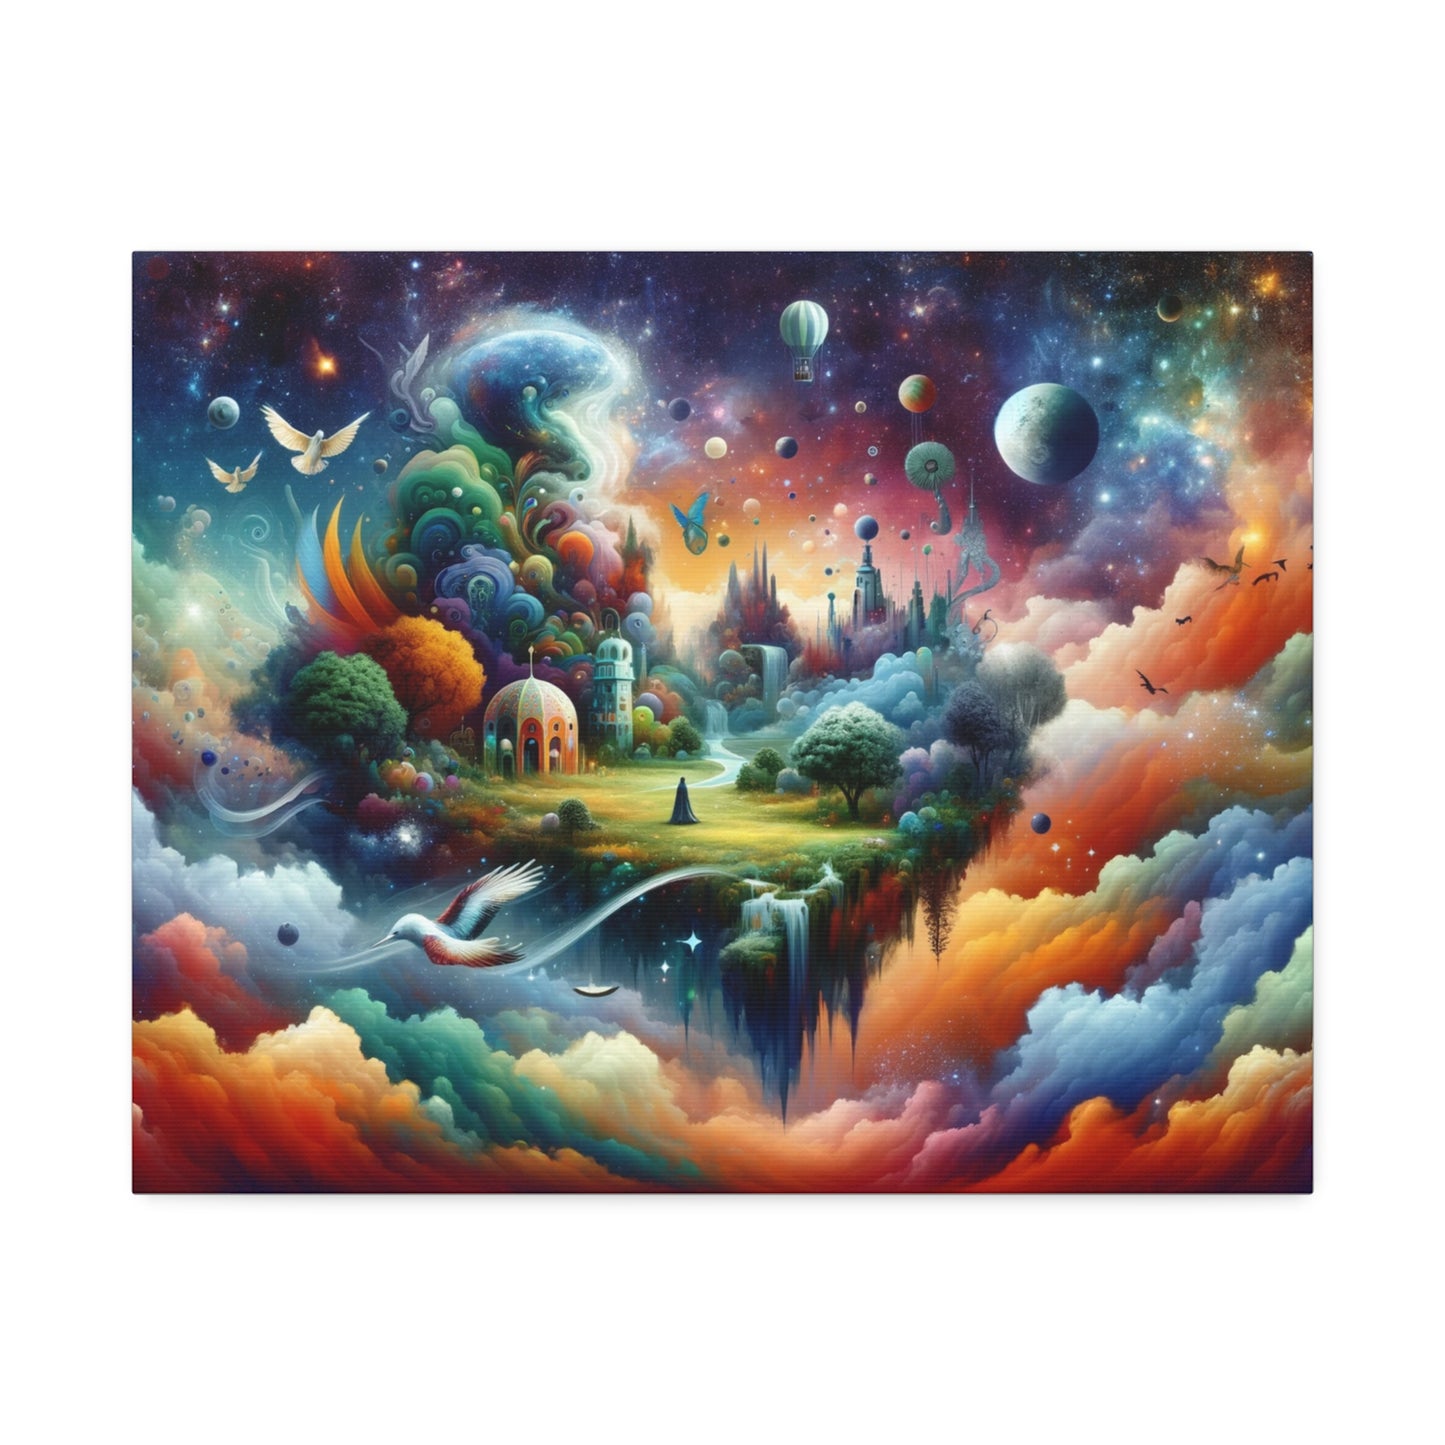 Dreamscape Fantasy Canvas Art - Surreal World of Reality and Fantasy